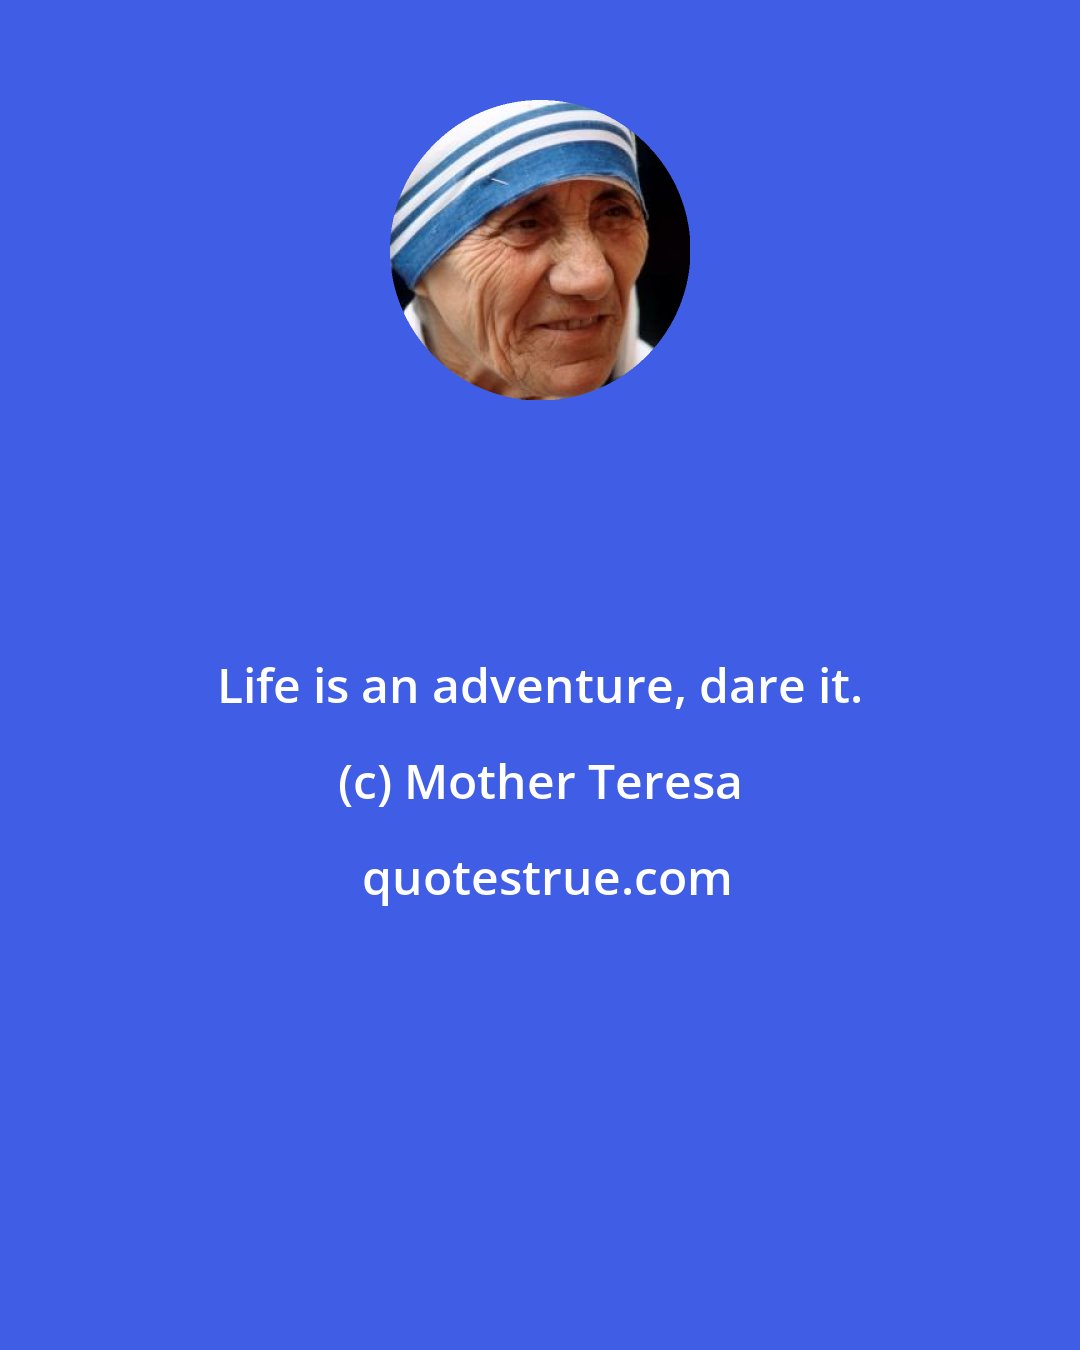 Mother Teresa: Life is an adventure, dare it.